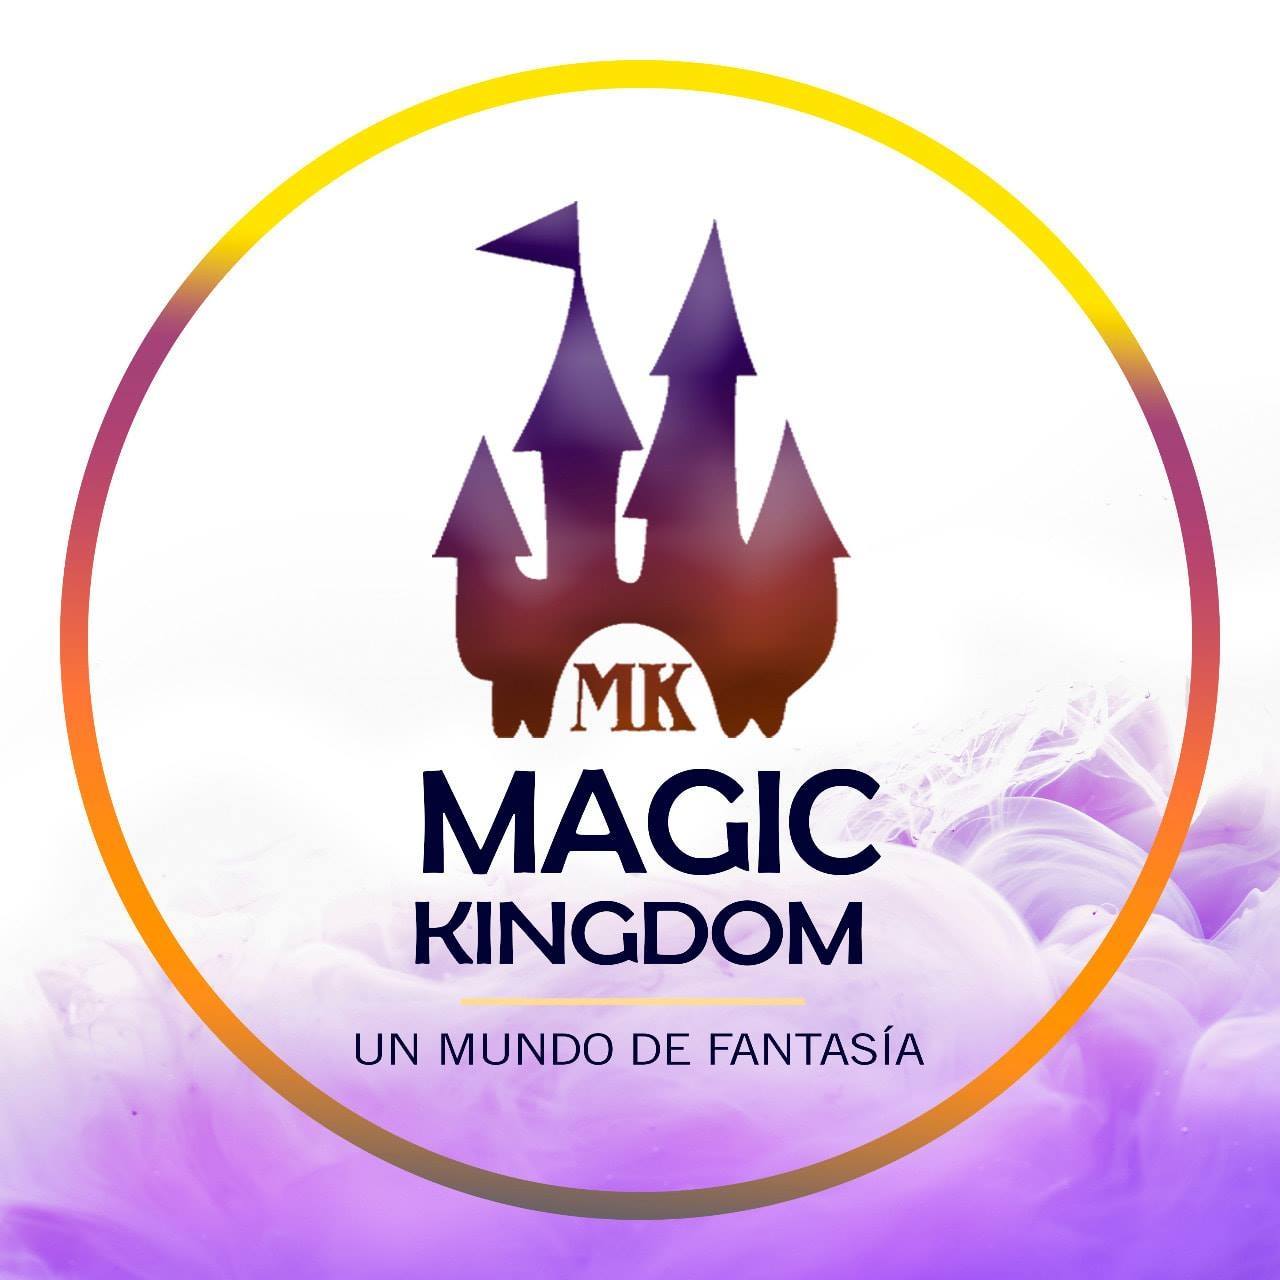 MAGIC KINGDOM Un Mundo de Fantasia